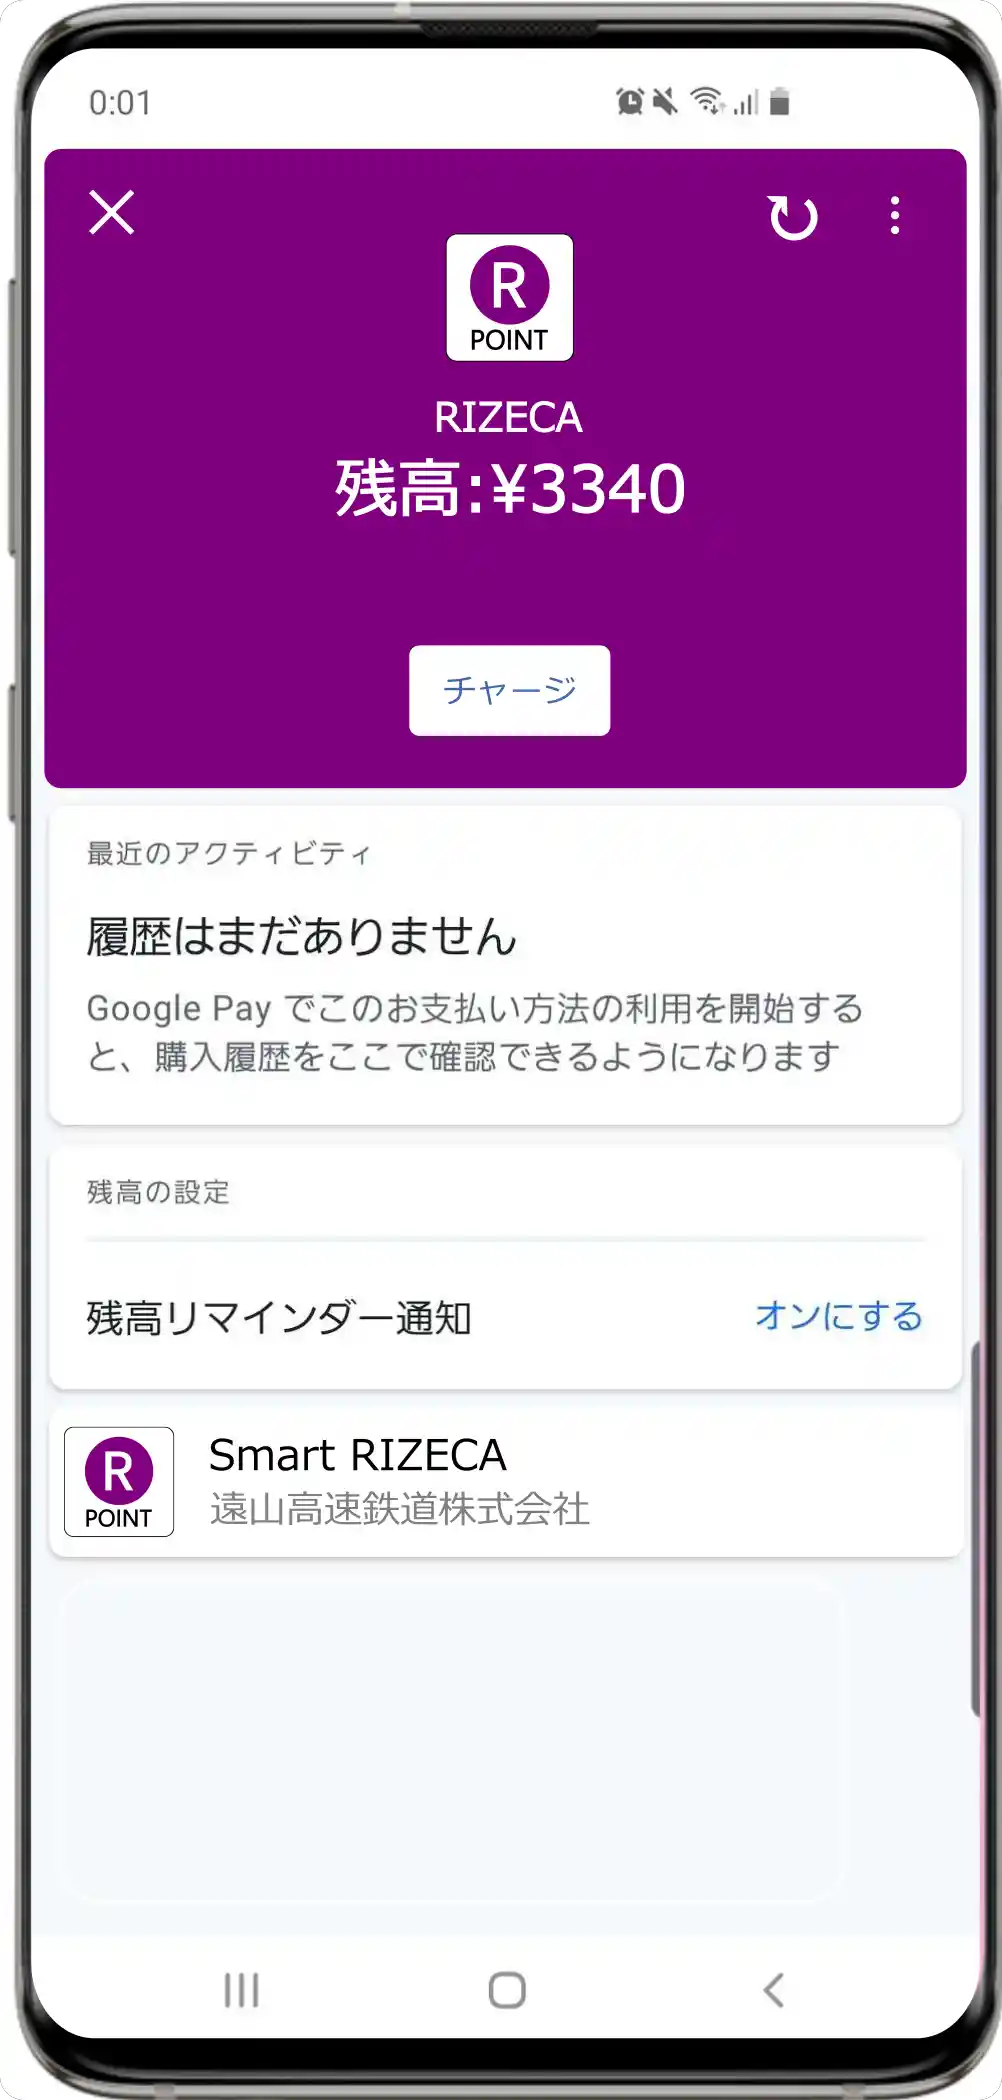 Smart Rizeca(スマホ).png